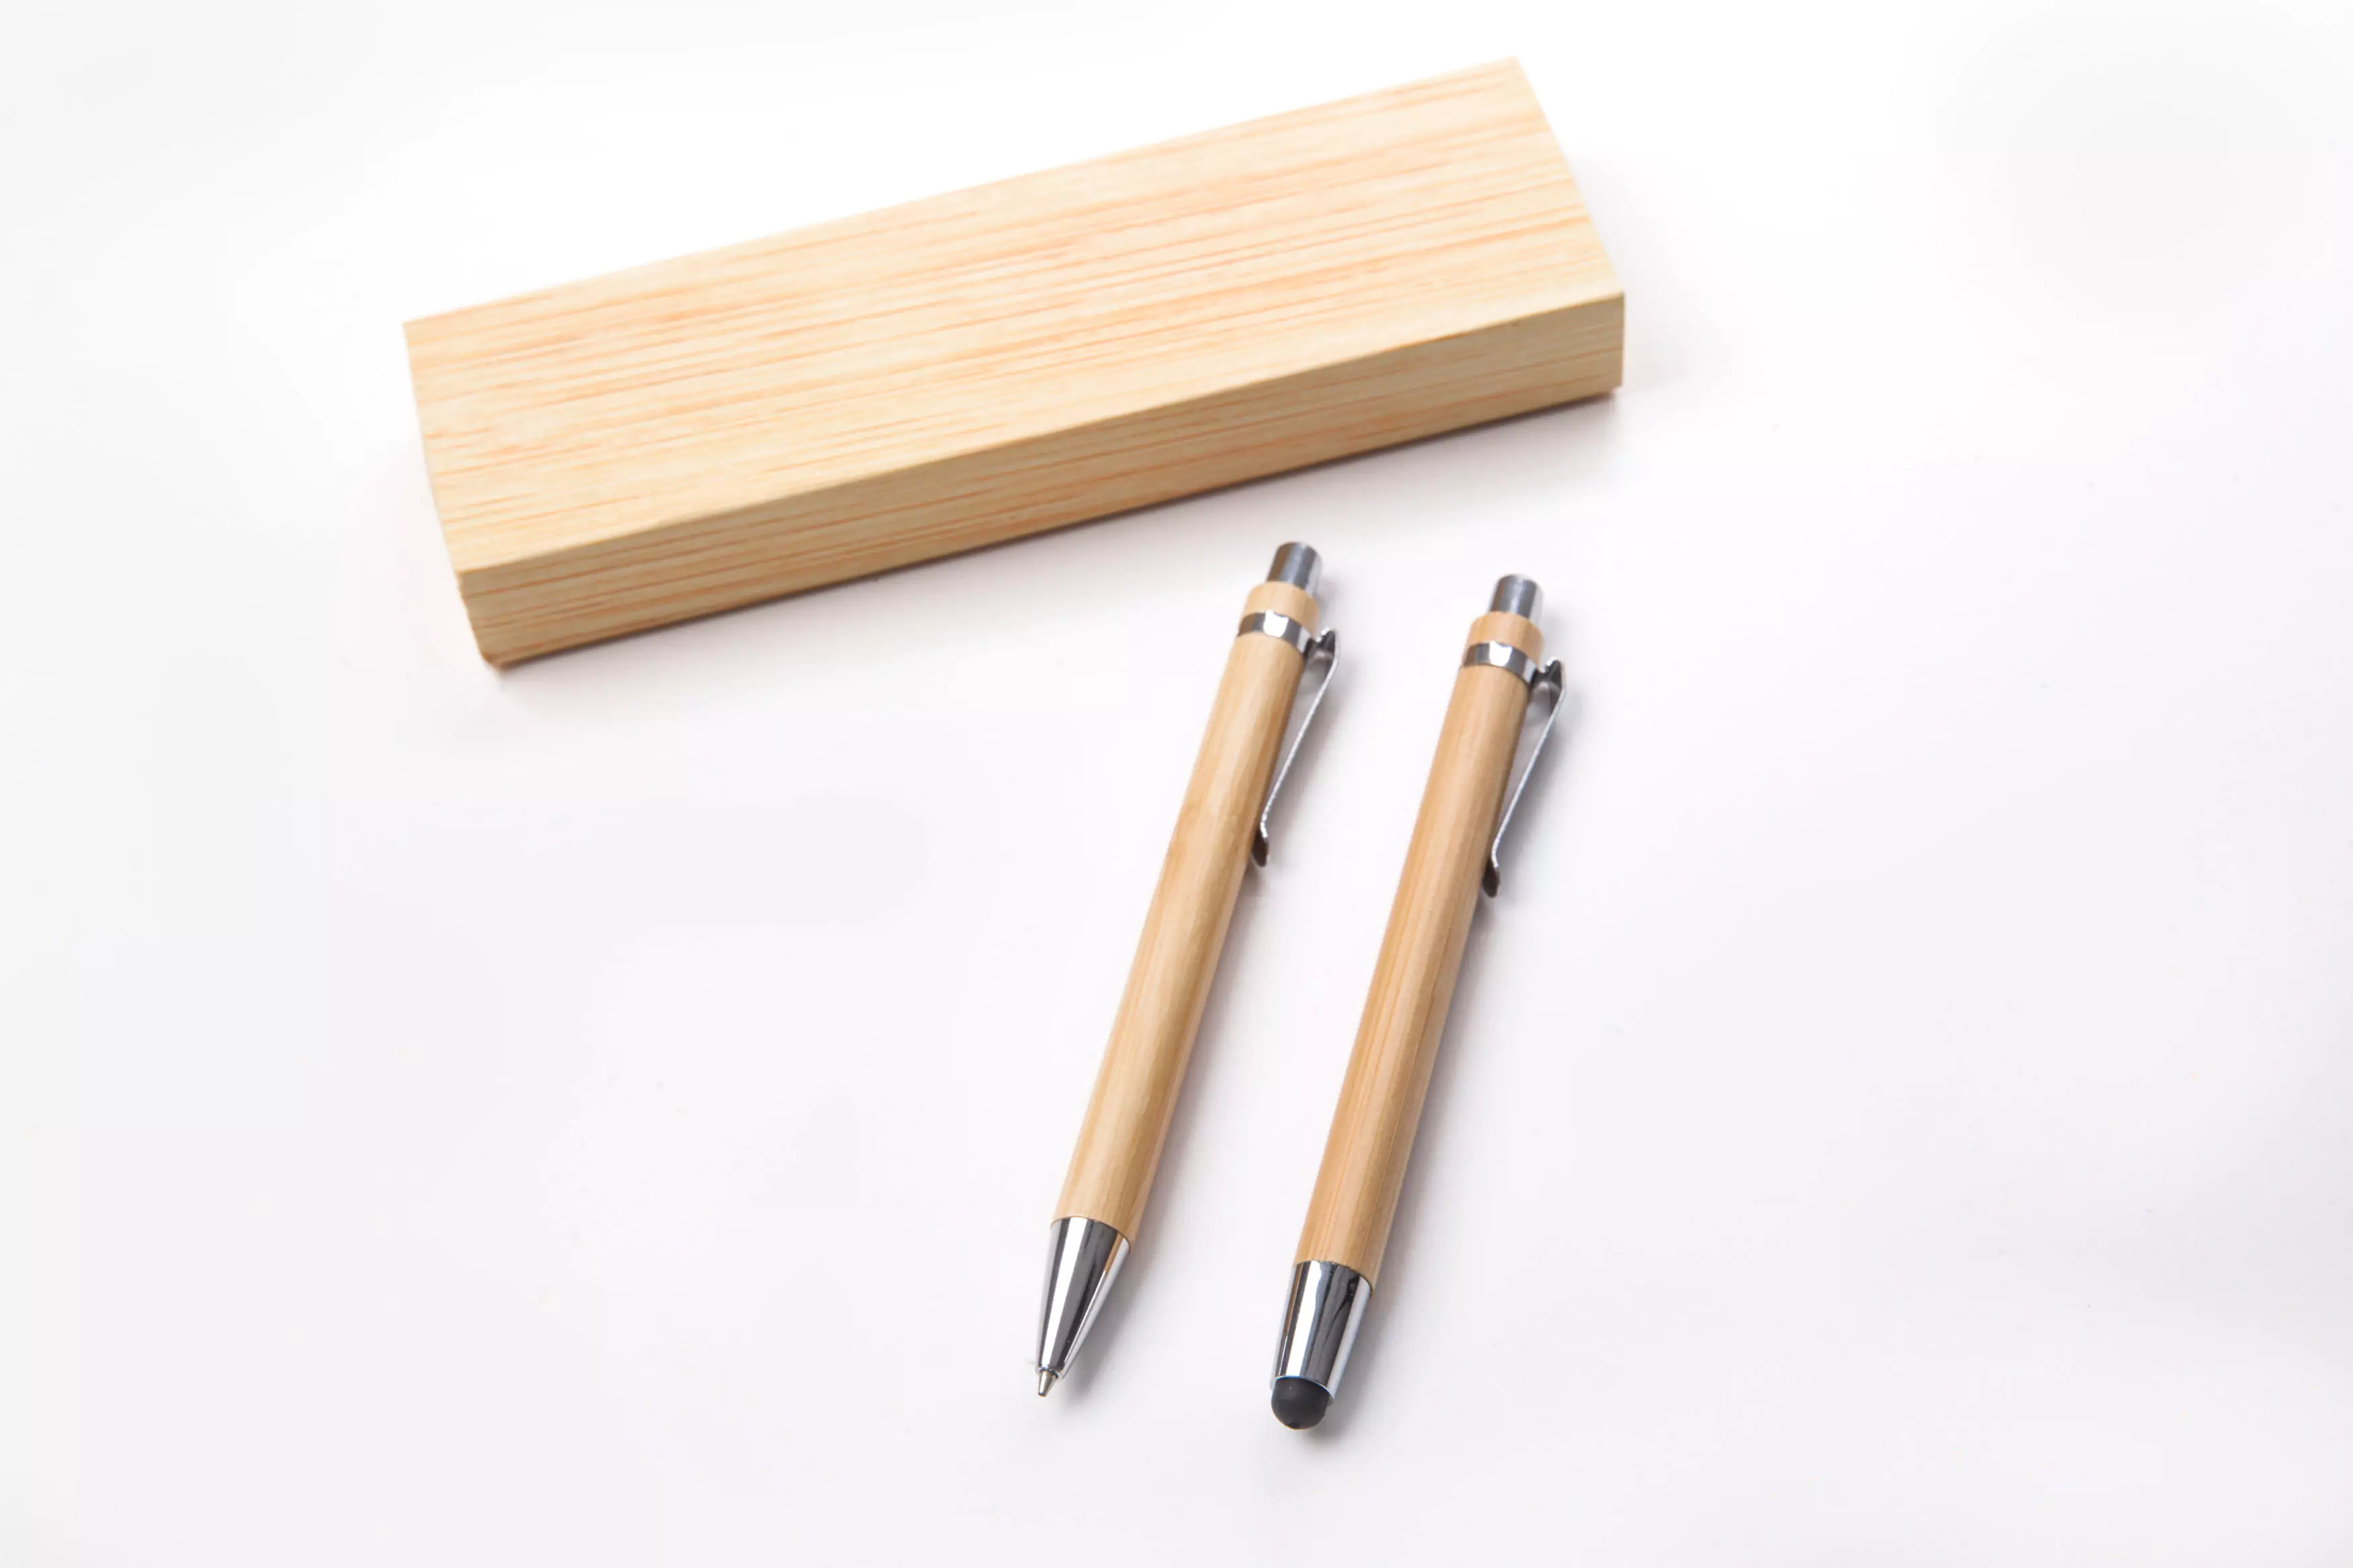 Bamboo pen and pencil set.